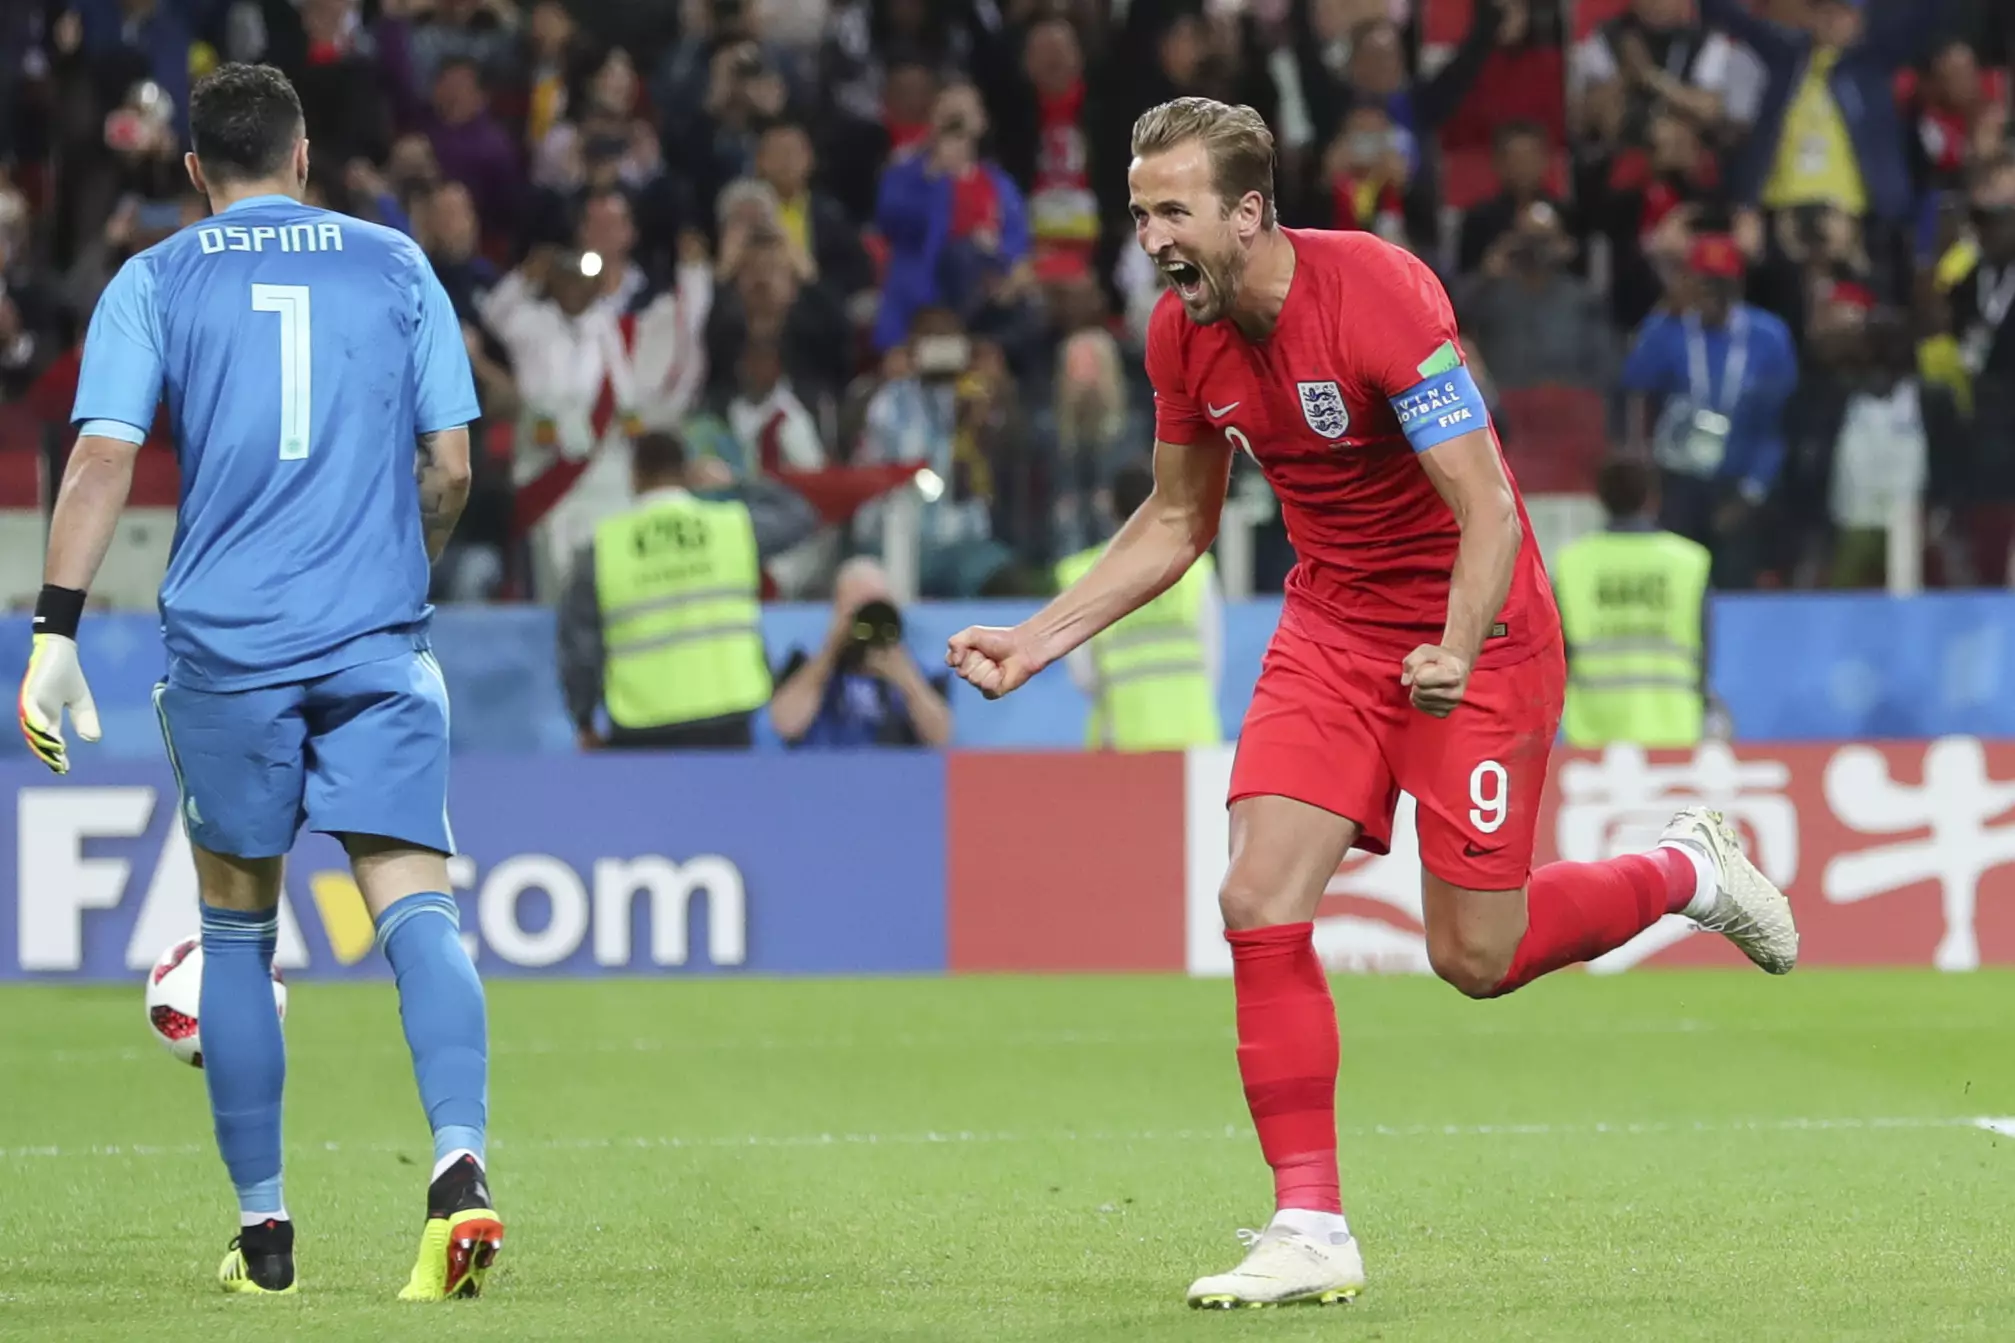 Captain Kane celebrates scoring a goal. Image: PA